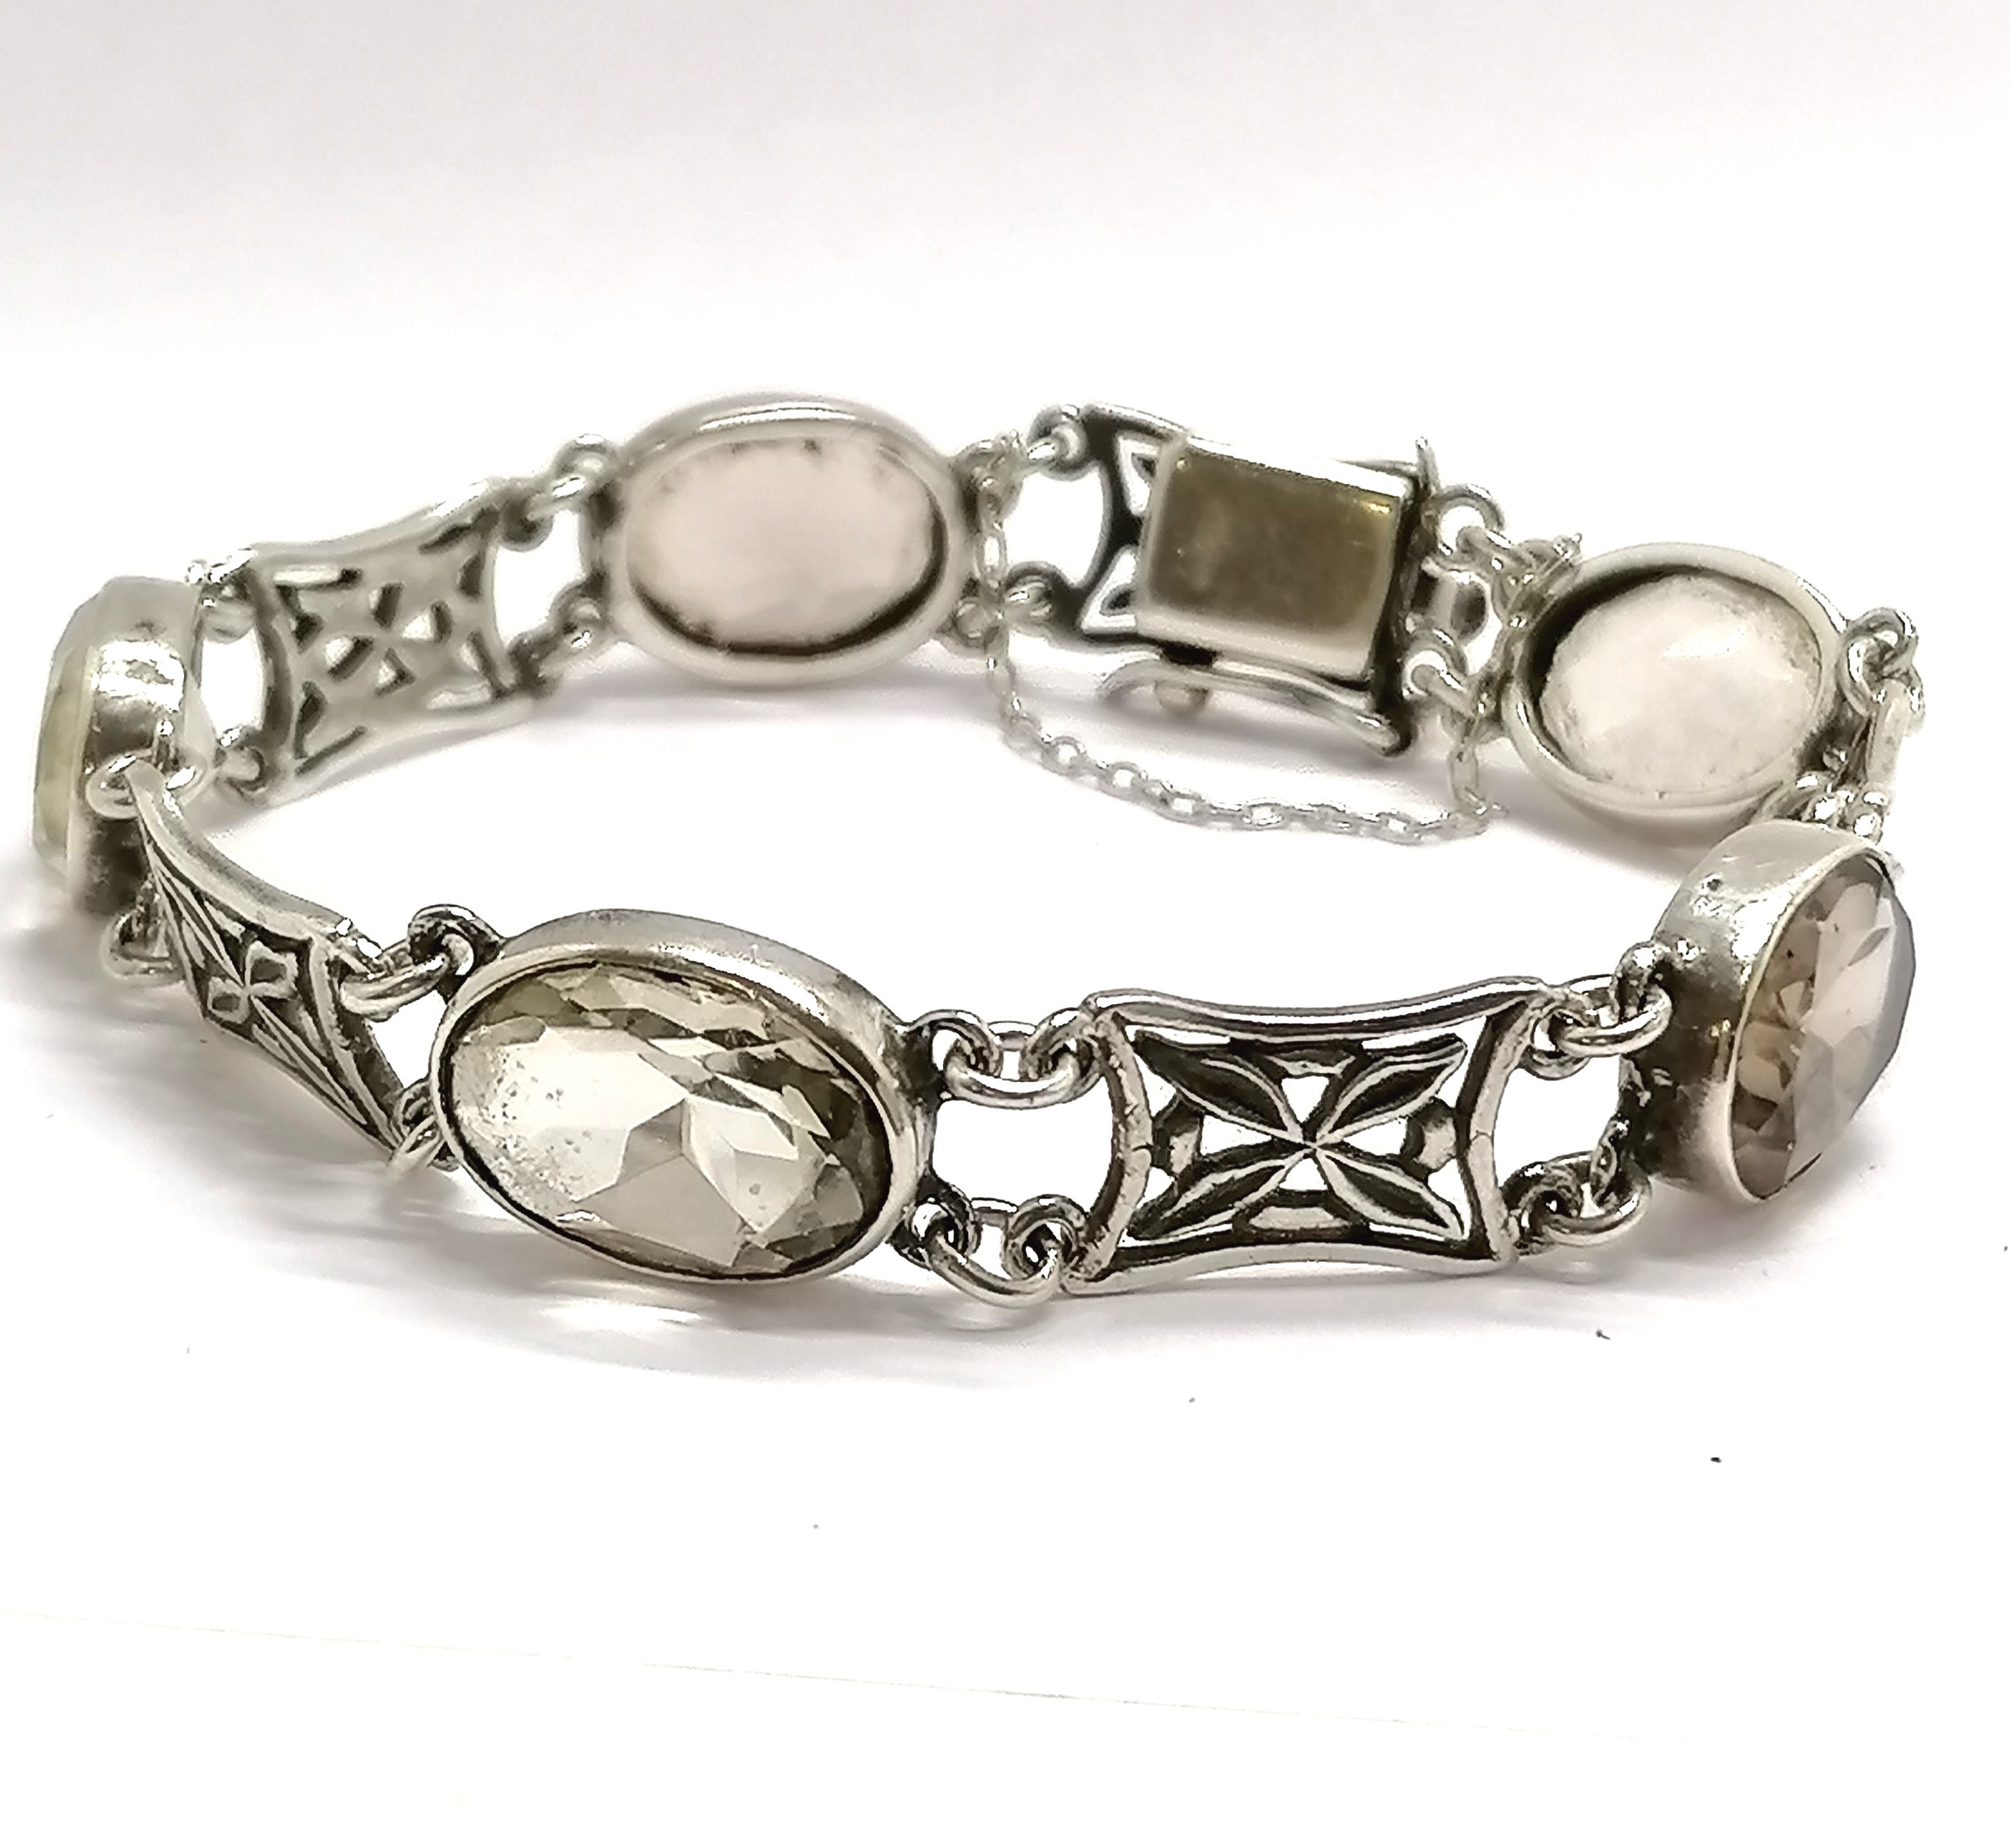 Silver citrine stone set bracelet - 19g total weight